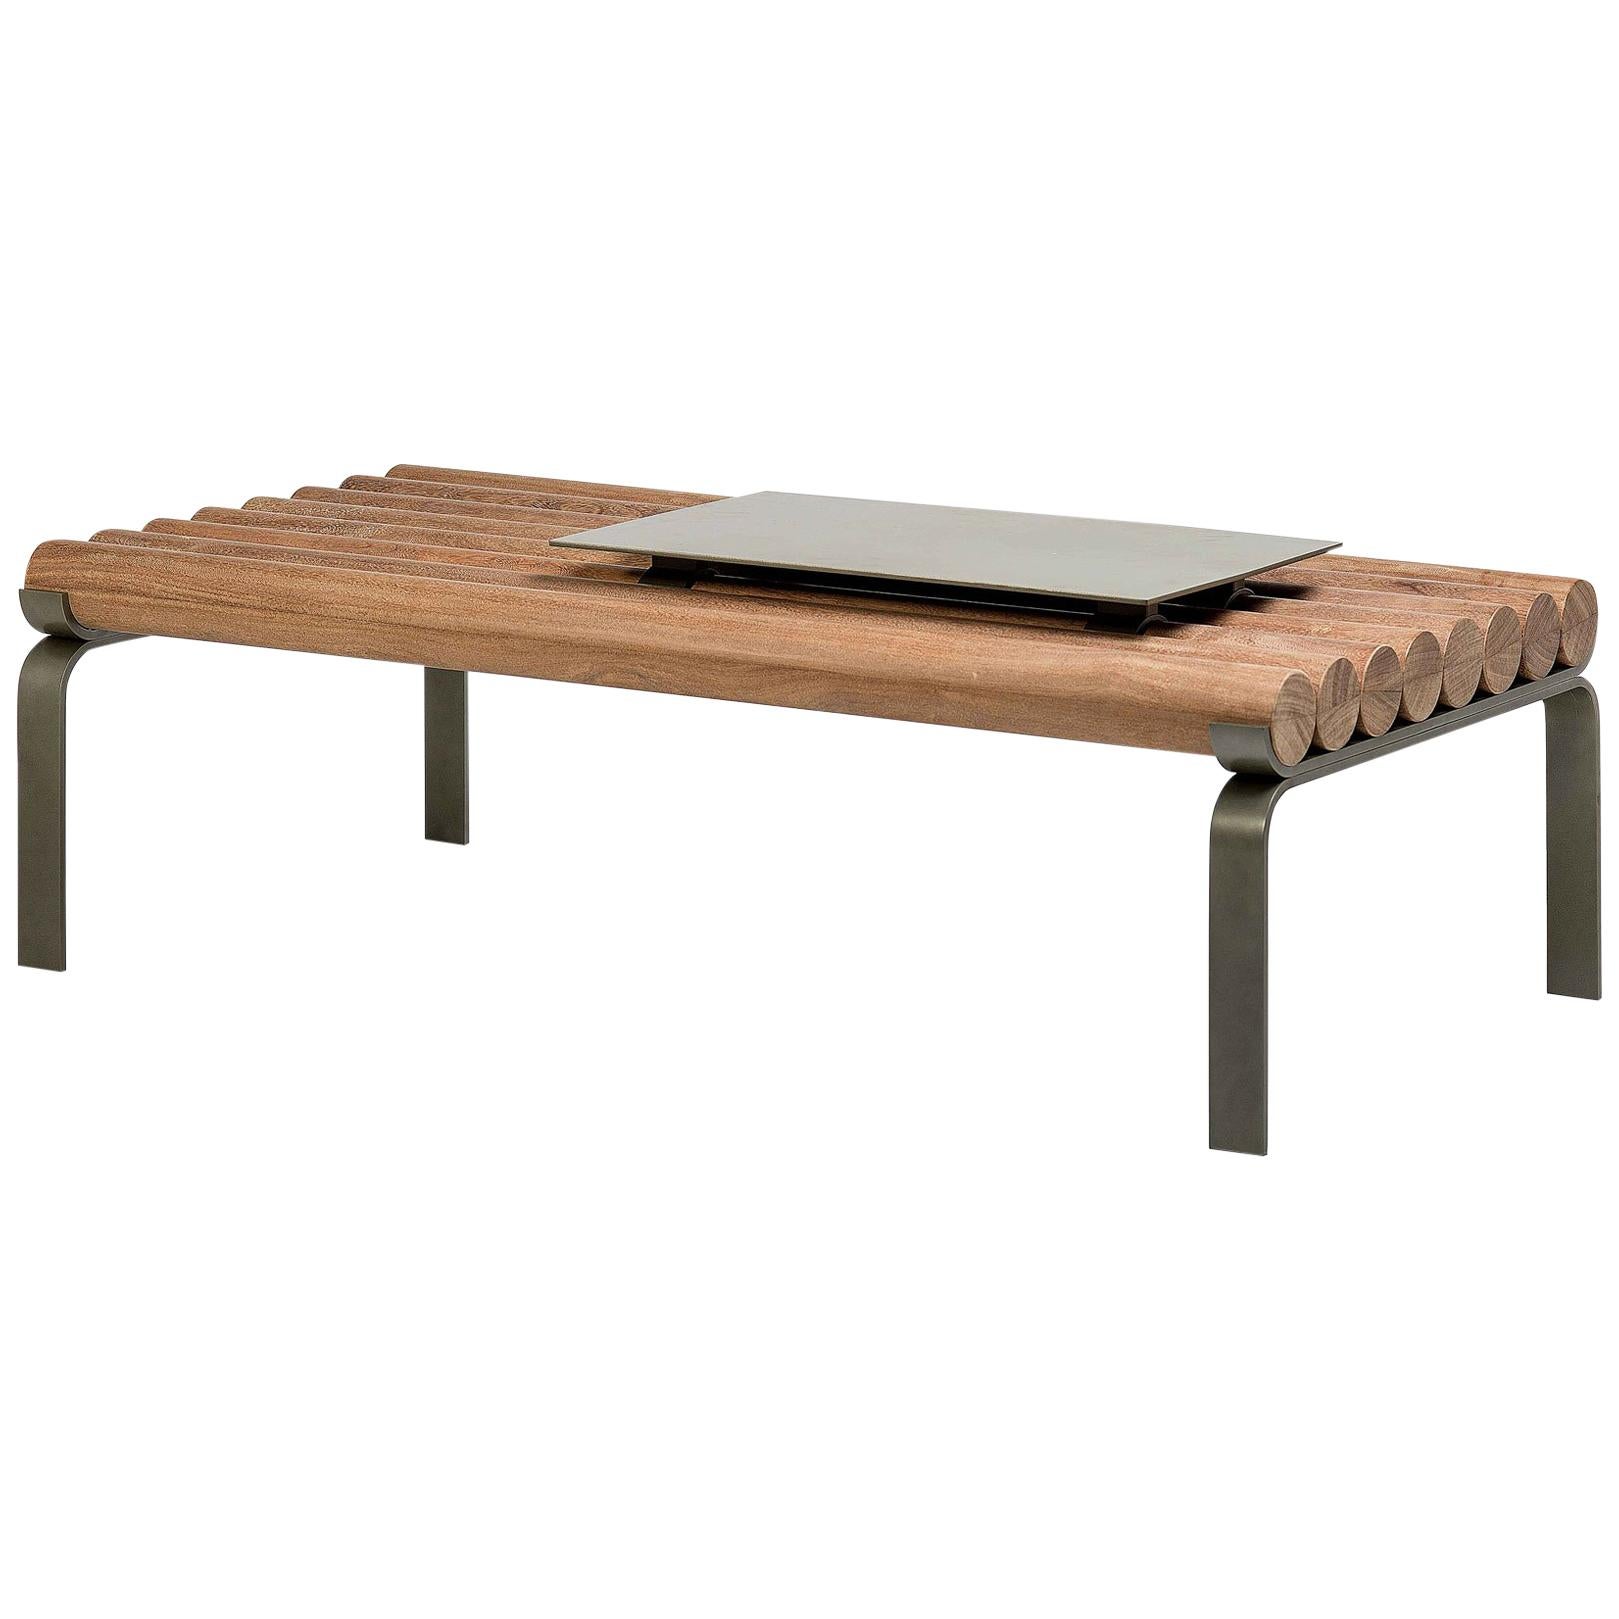 "Toras" Center Table in Solid Wood, Arthur Casas, Brazilian Contemporary Design